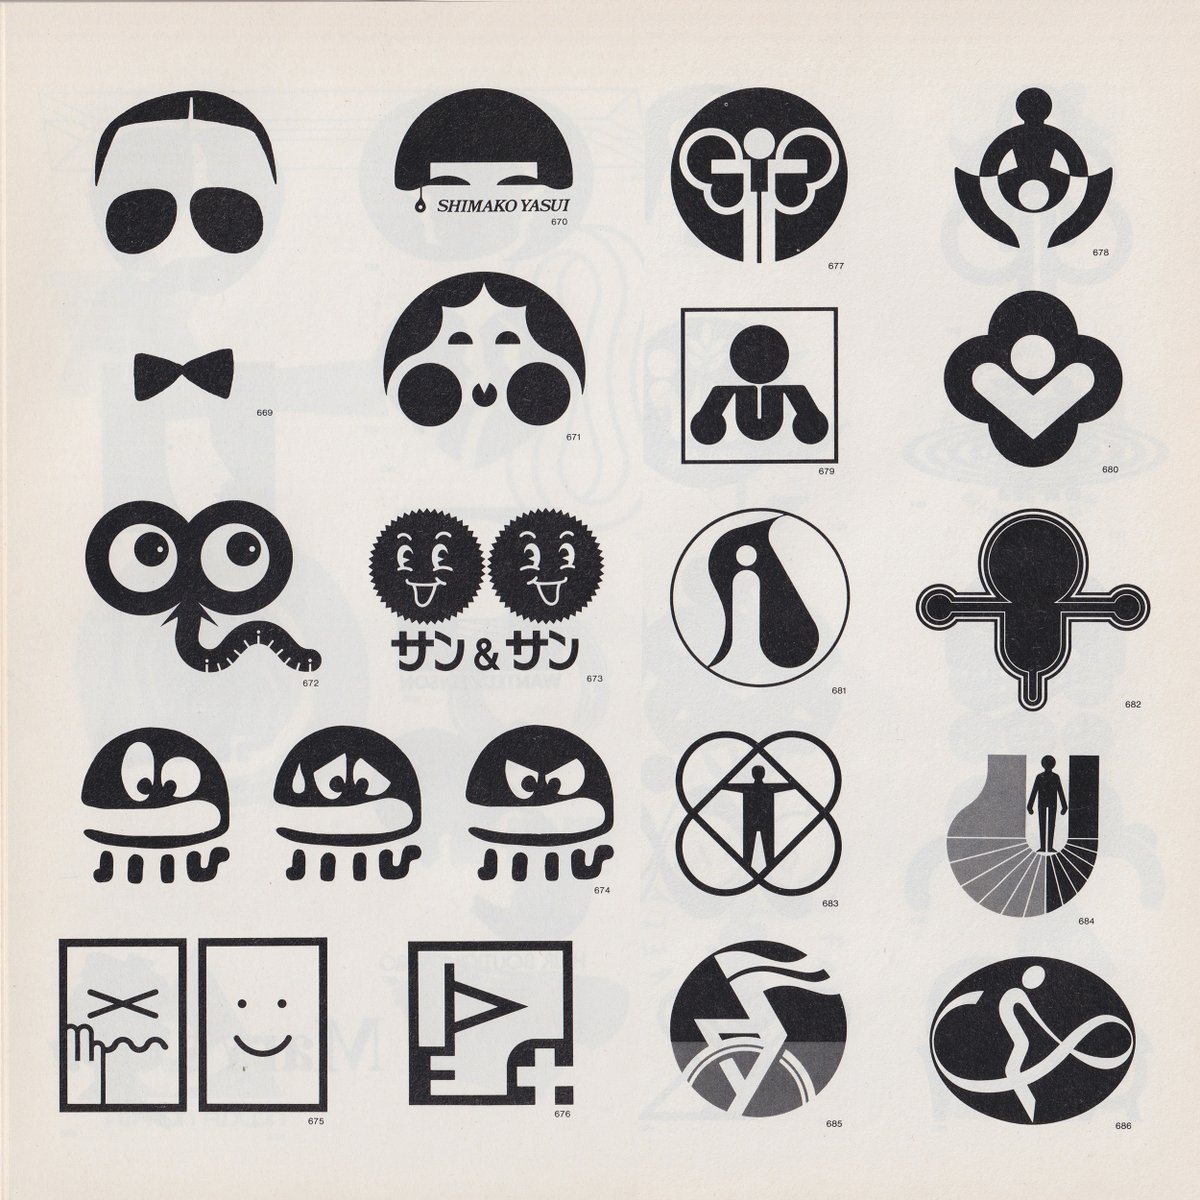 Some odd and modernist logos from the Japanese book Trademarks, Symbolmarks & Logotypes 1980-81 Volume.

Discover thousands more modernist logos at logo-archive.org

#logos #design #branding #logodesign #design #designinspiration #logoarchive